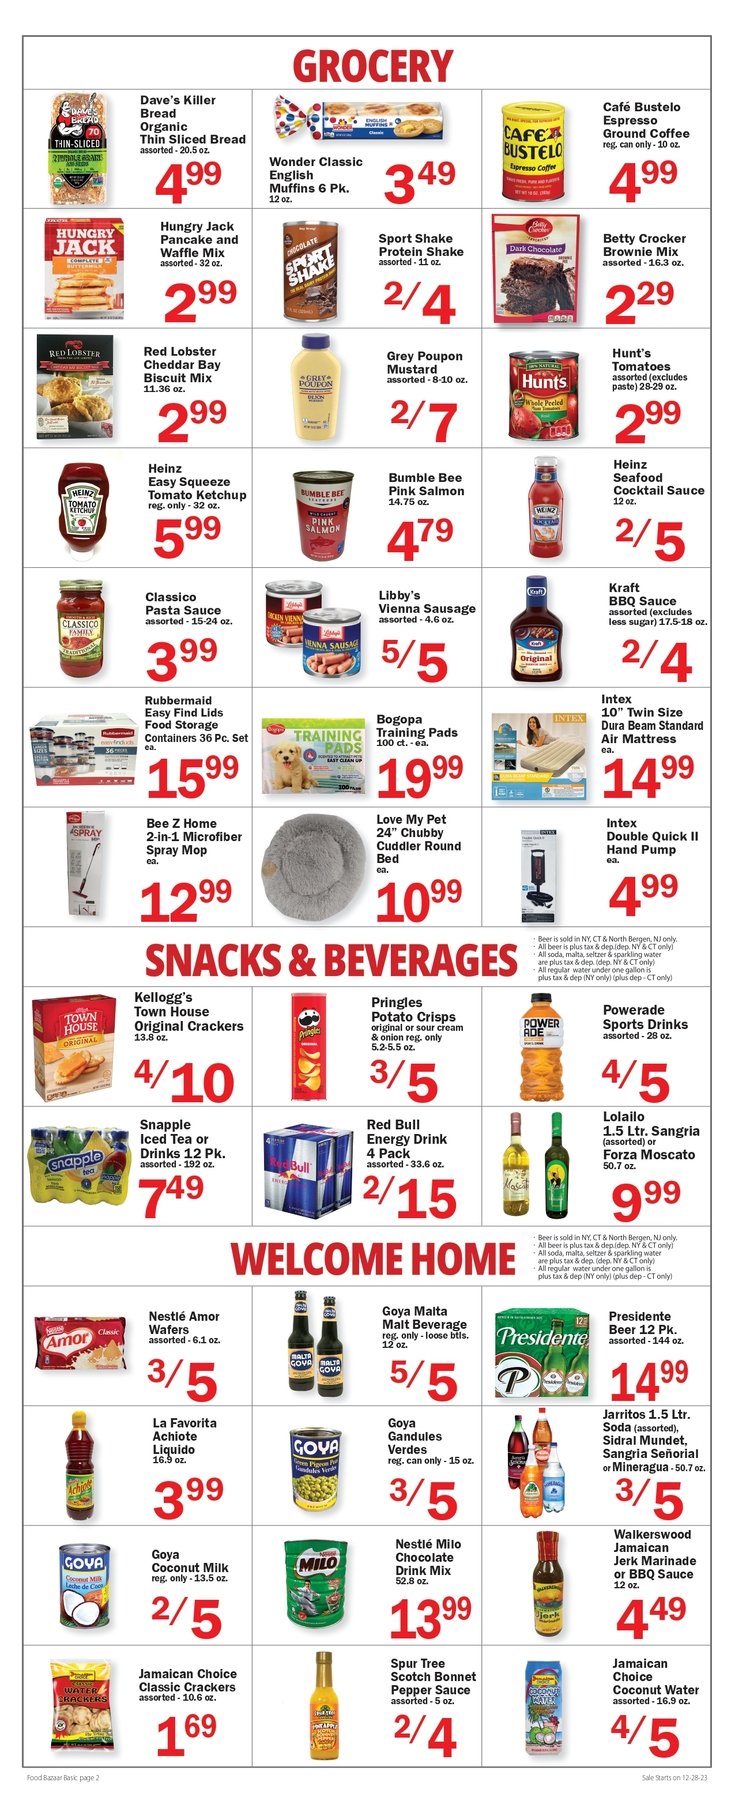 Print Weekly Specials | Food Bazaar Supermarket | Bronx Terminal Market ...